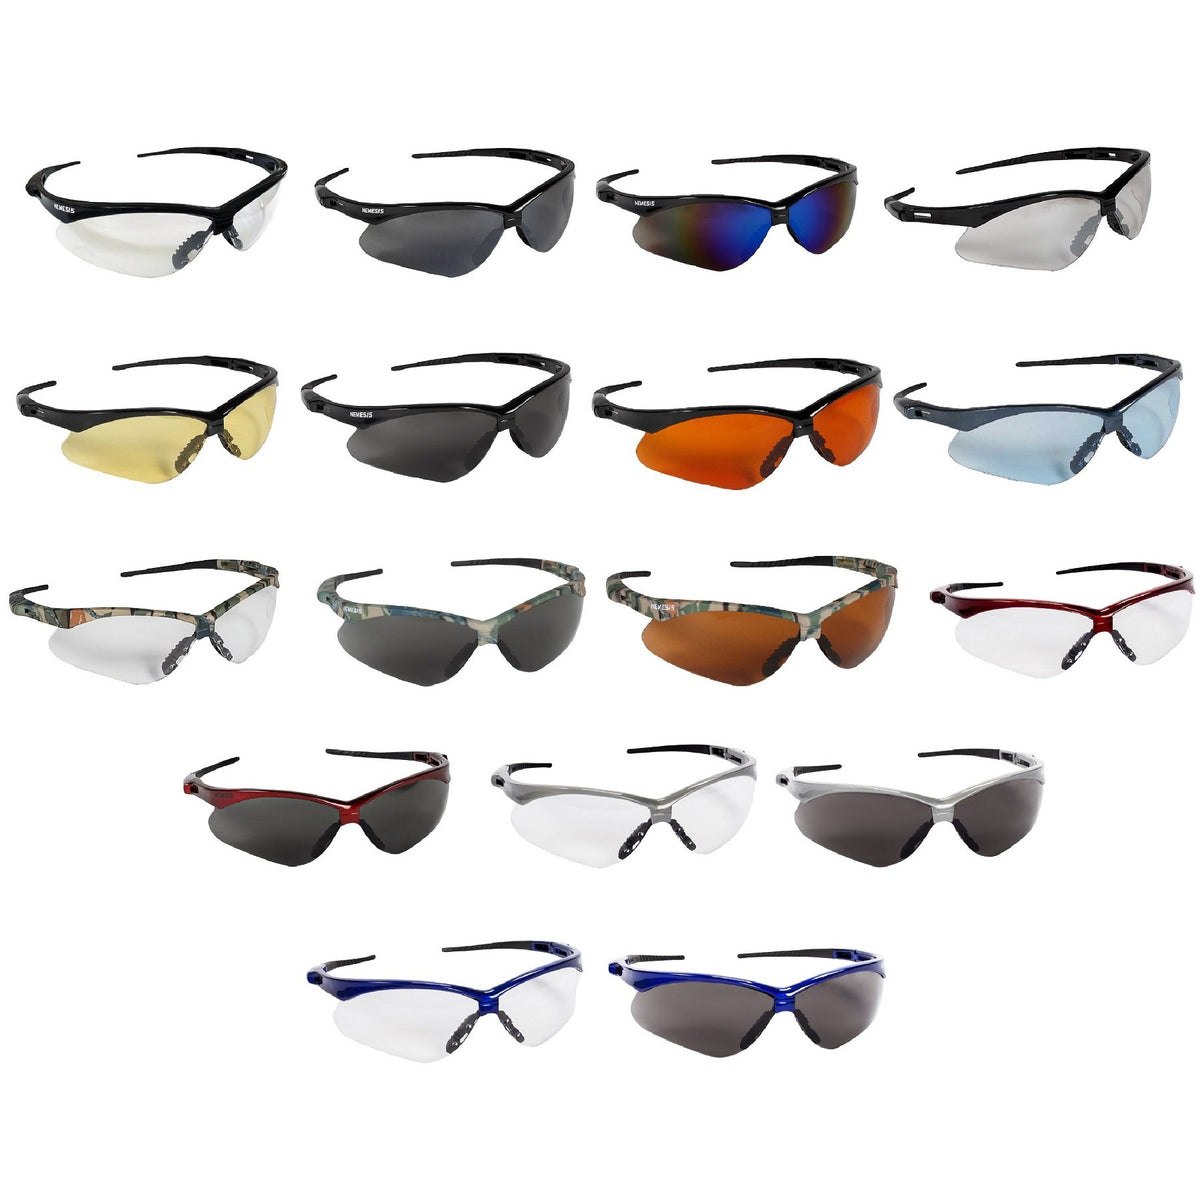 Kleenguard Nemesis Safety Glasses / Sunglasses, ANSI Z87.1 — ASA 